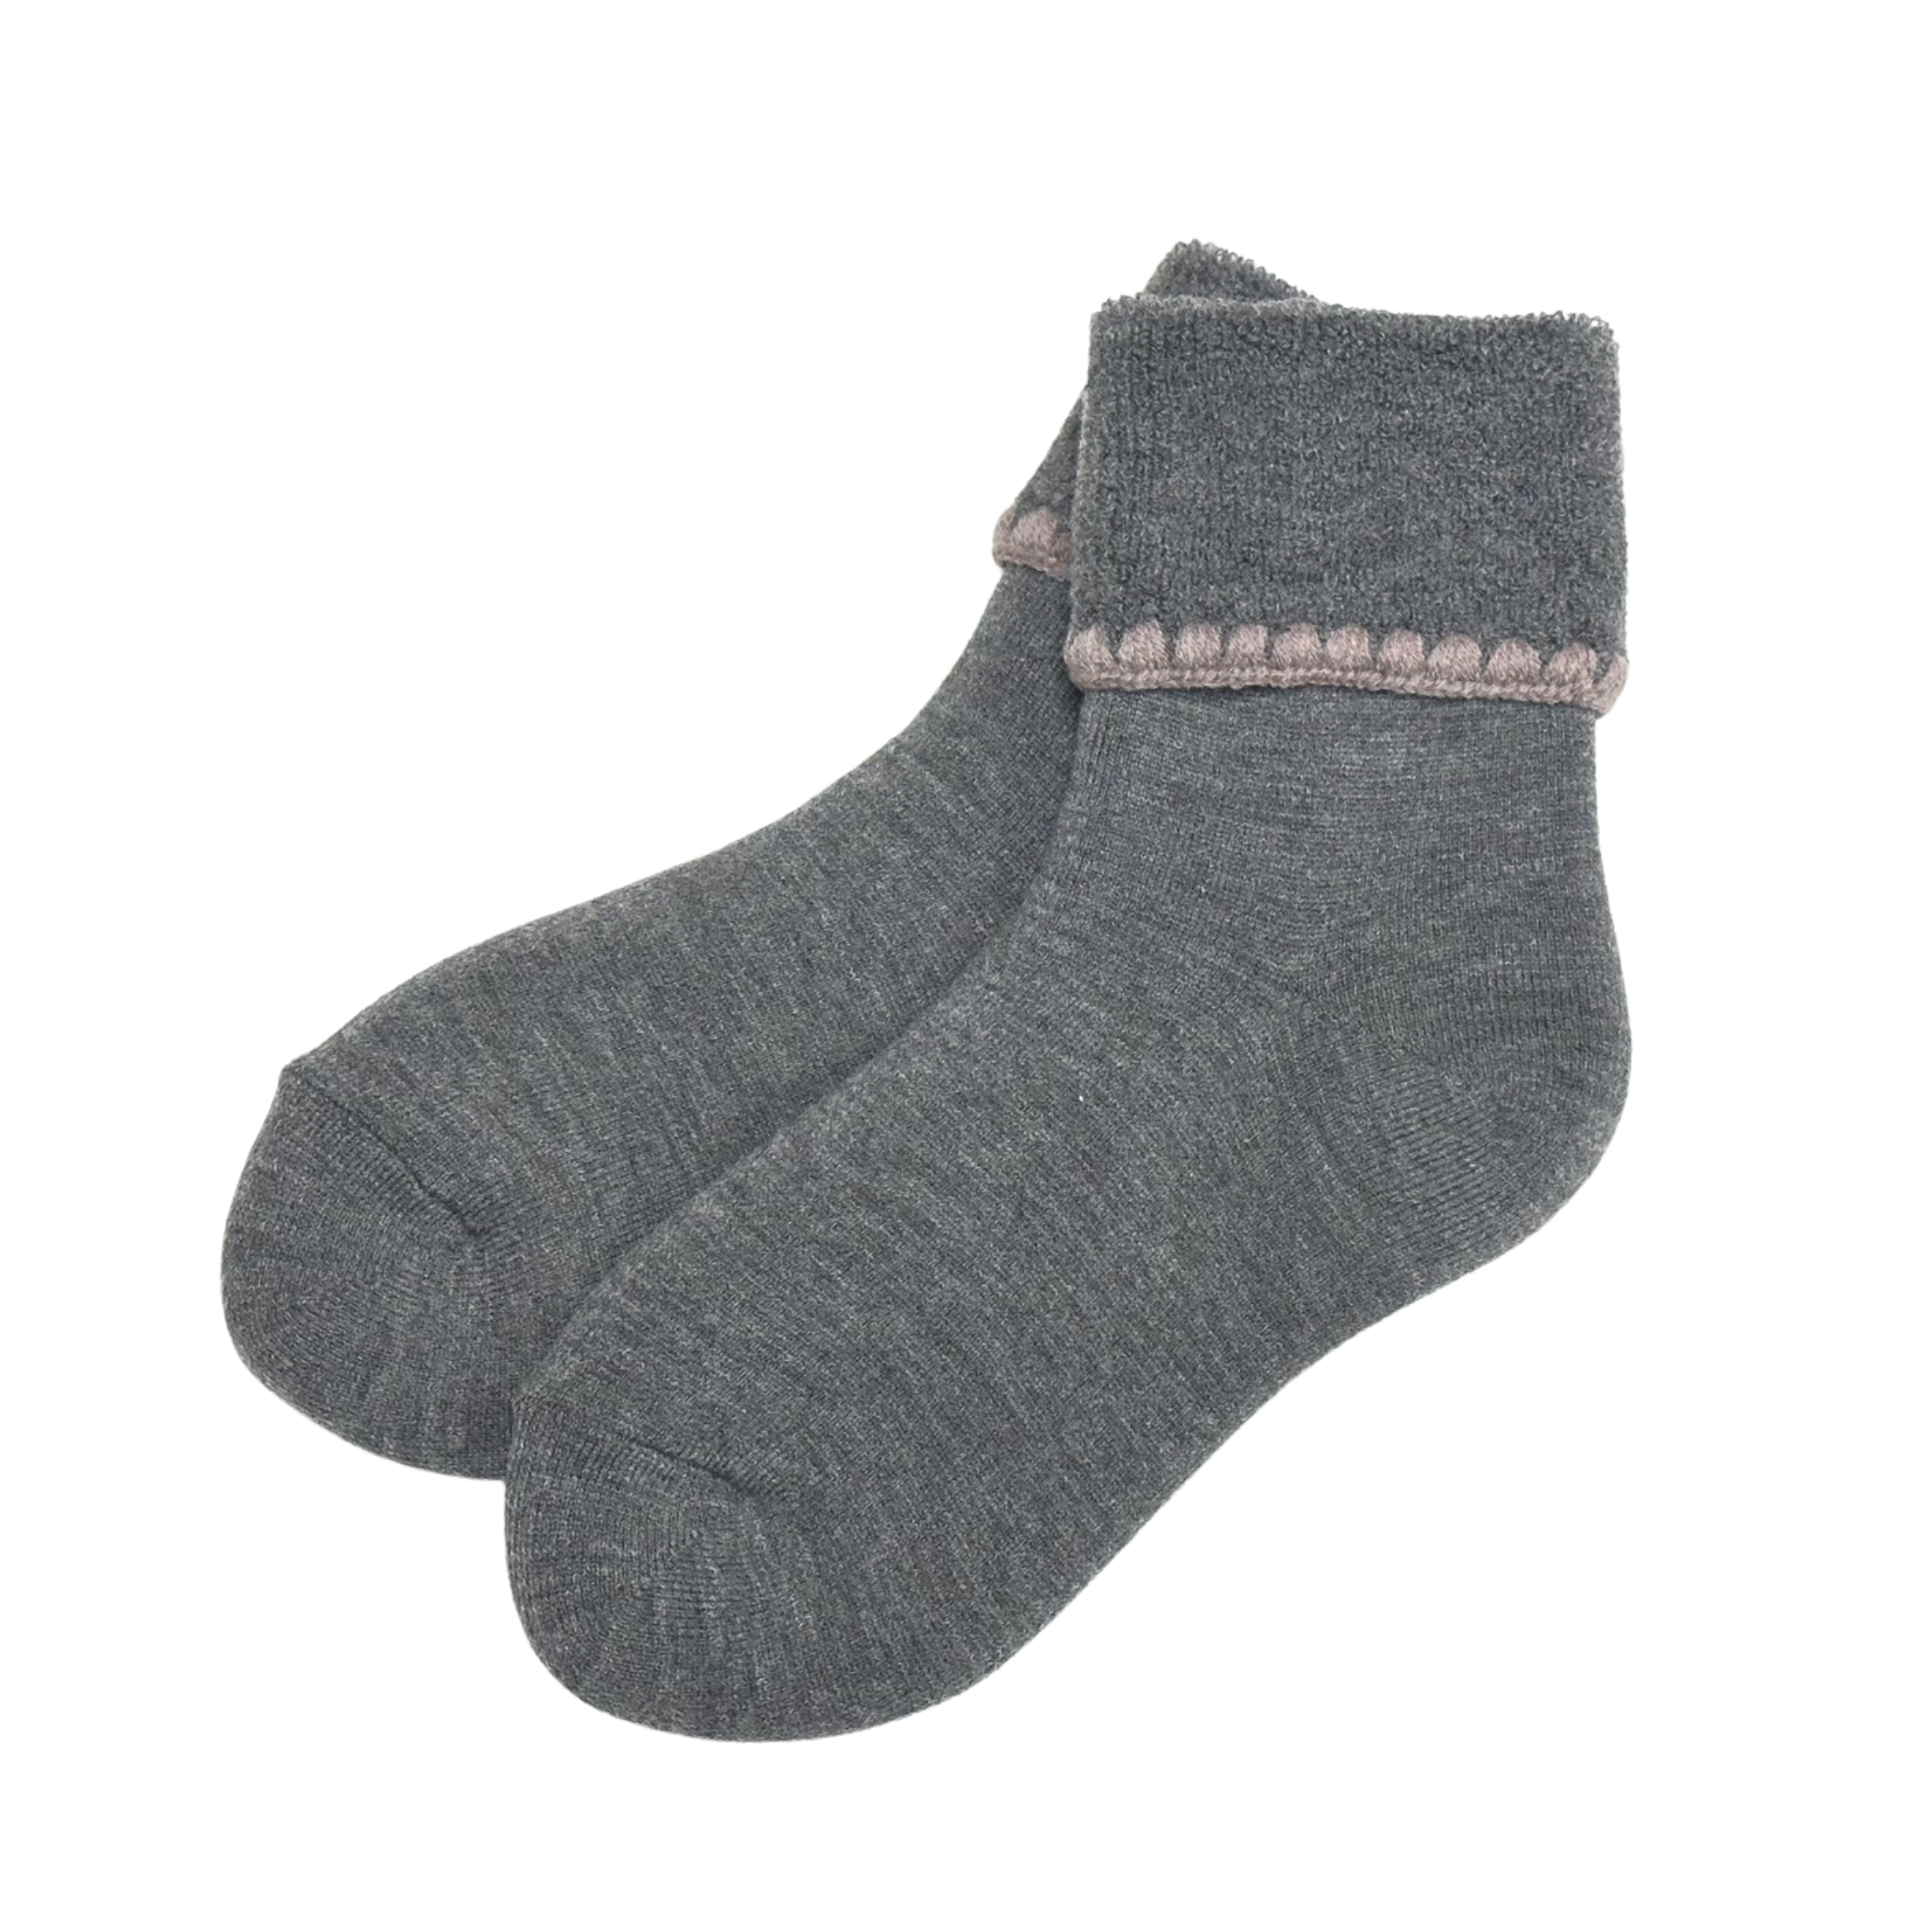 Slipper Cuff Socks - CHERRYSTONEstyle